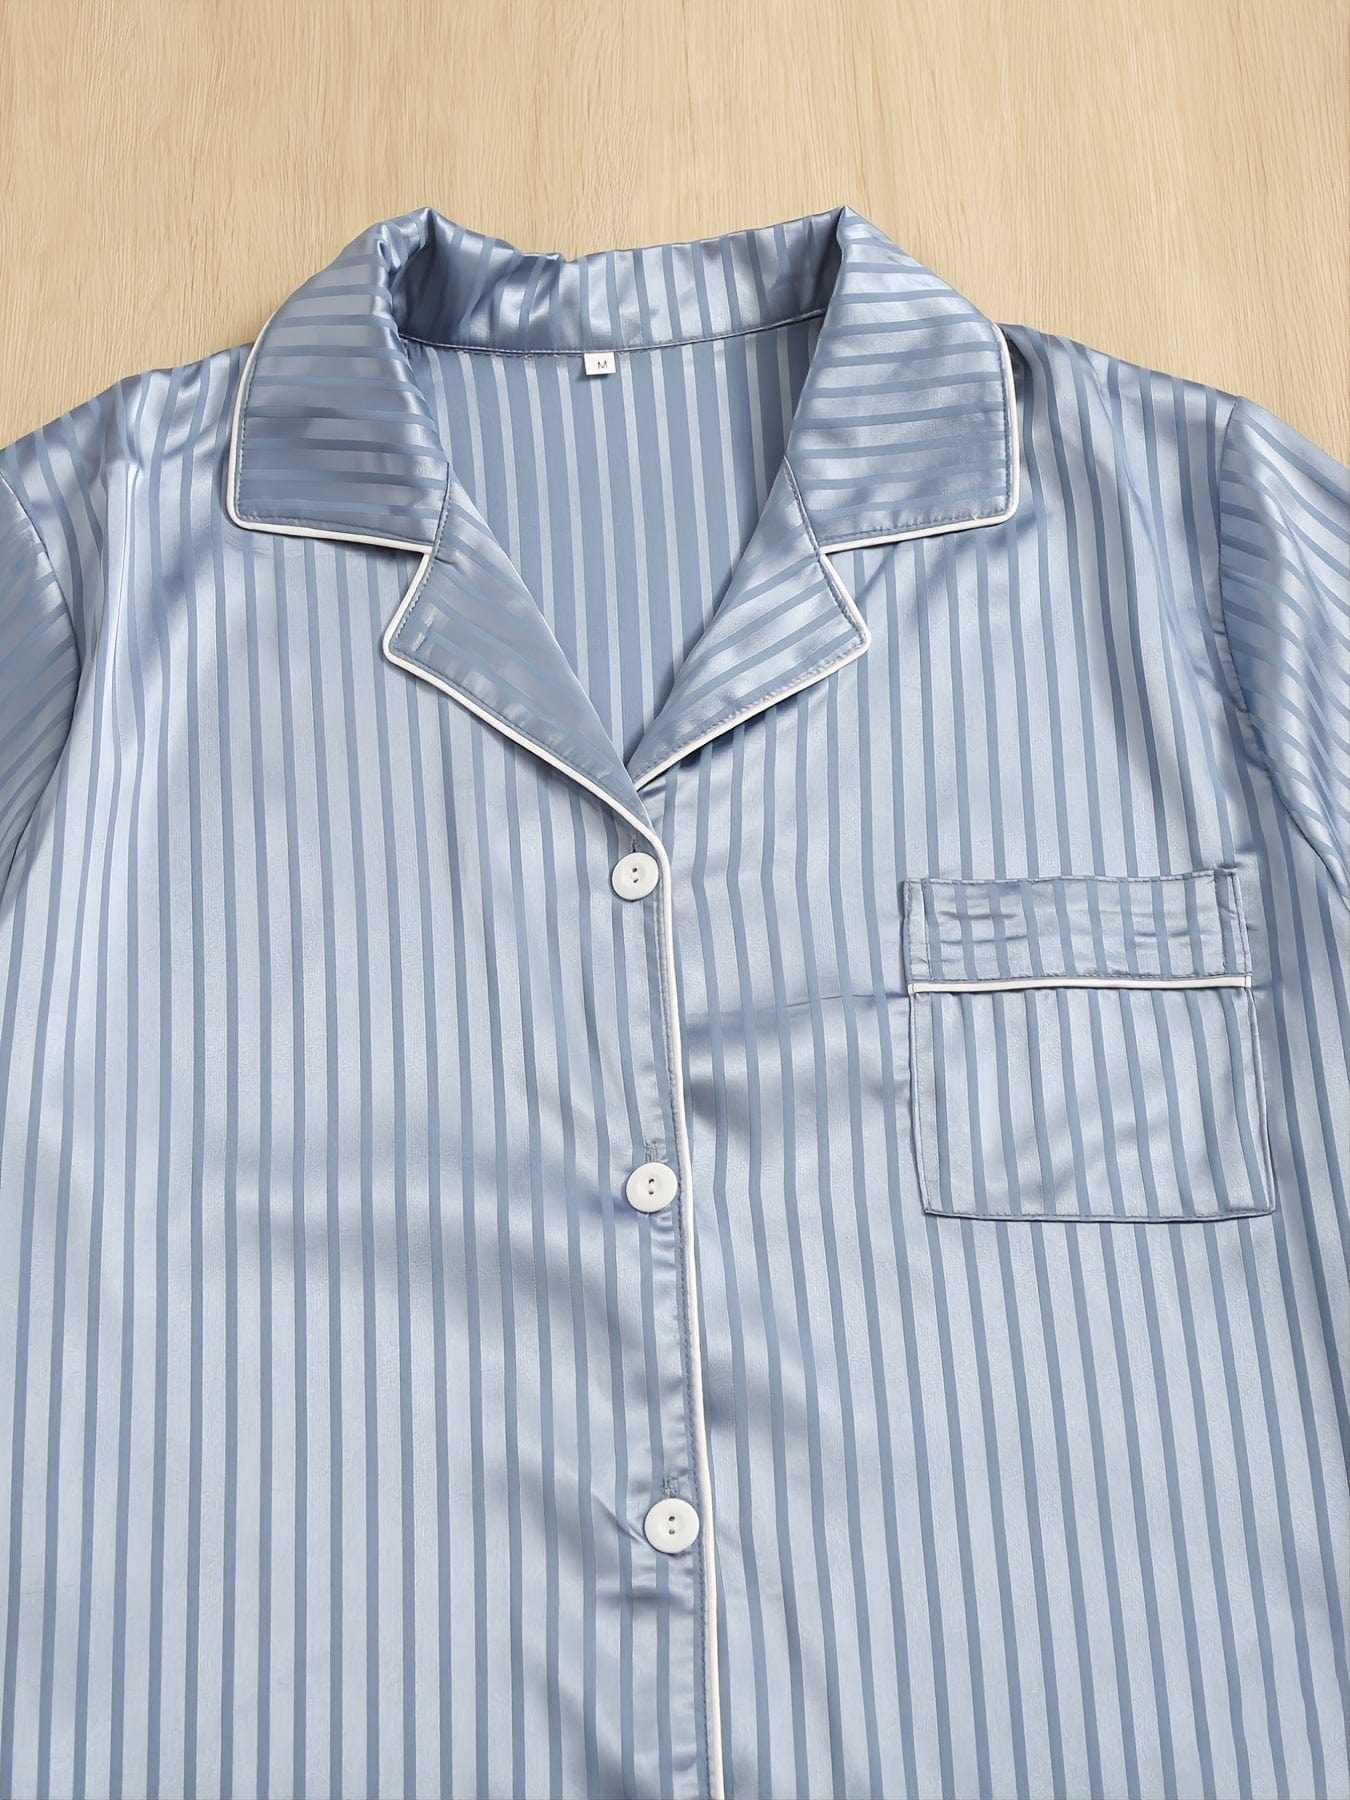 1pc Men's Satin Button Up Striped Pajama Set, Men's Sleepwear